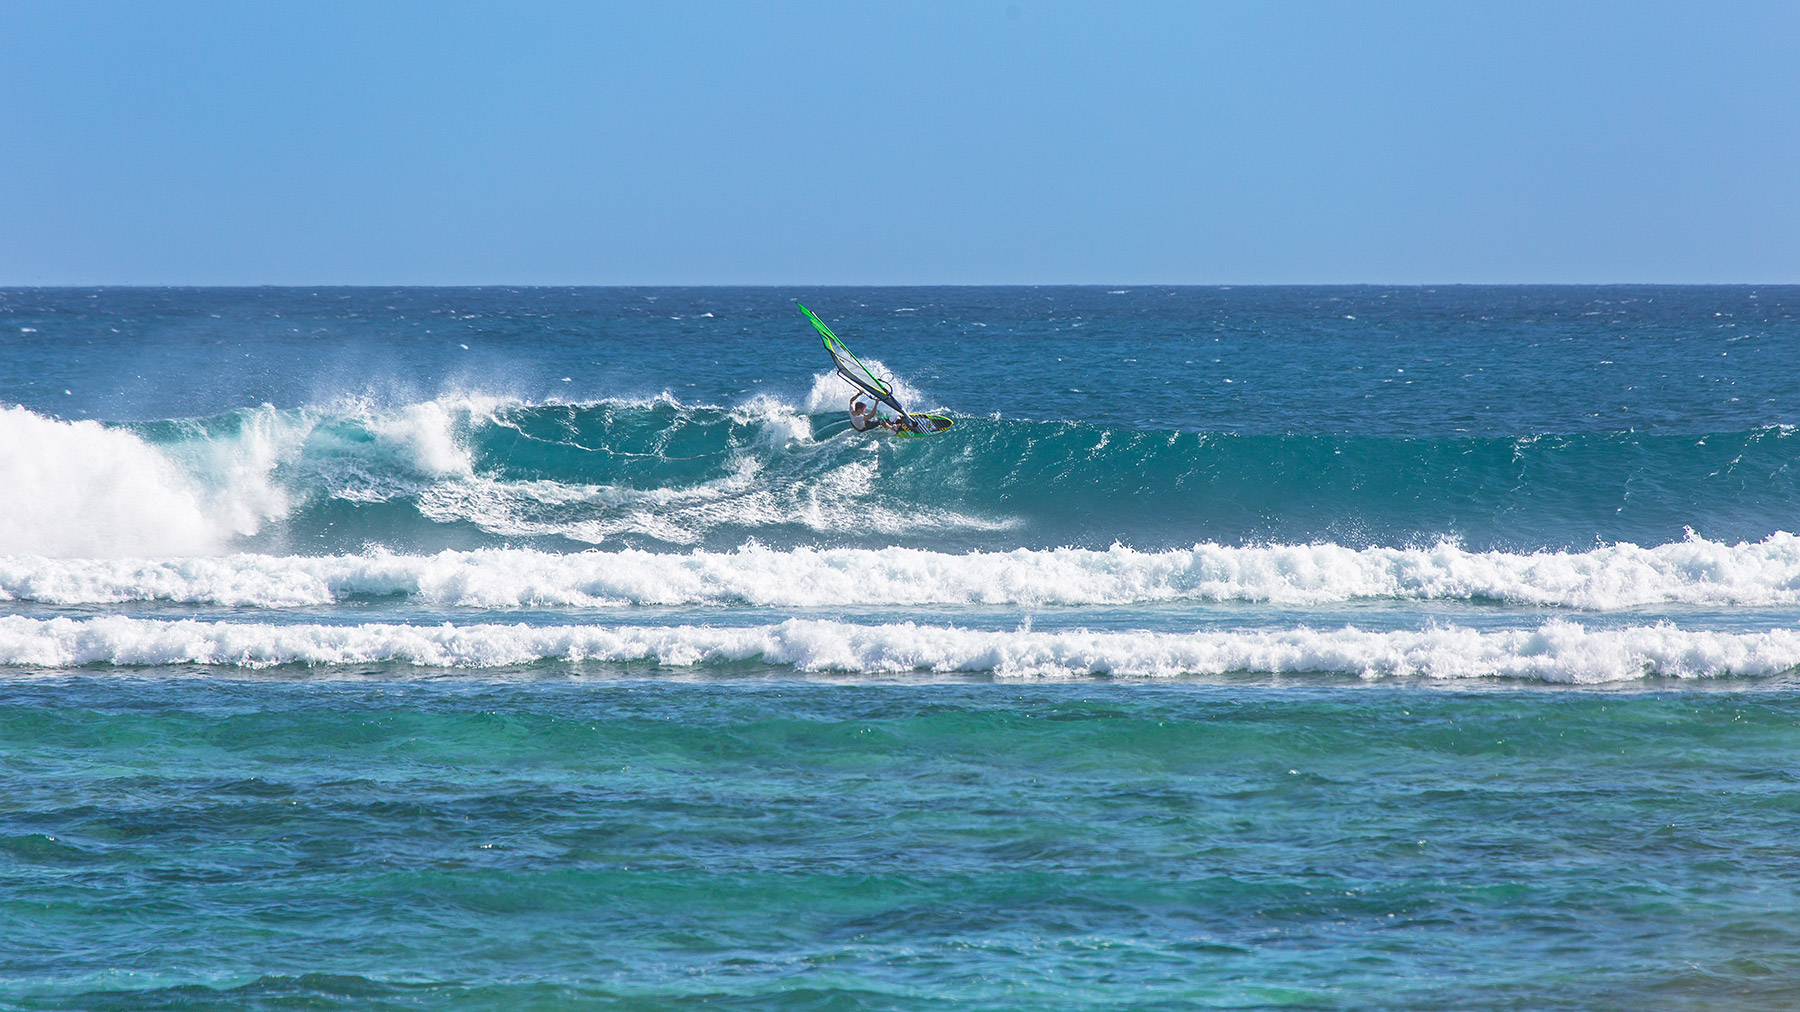 alastair mcleod windsurfing a fun reef break